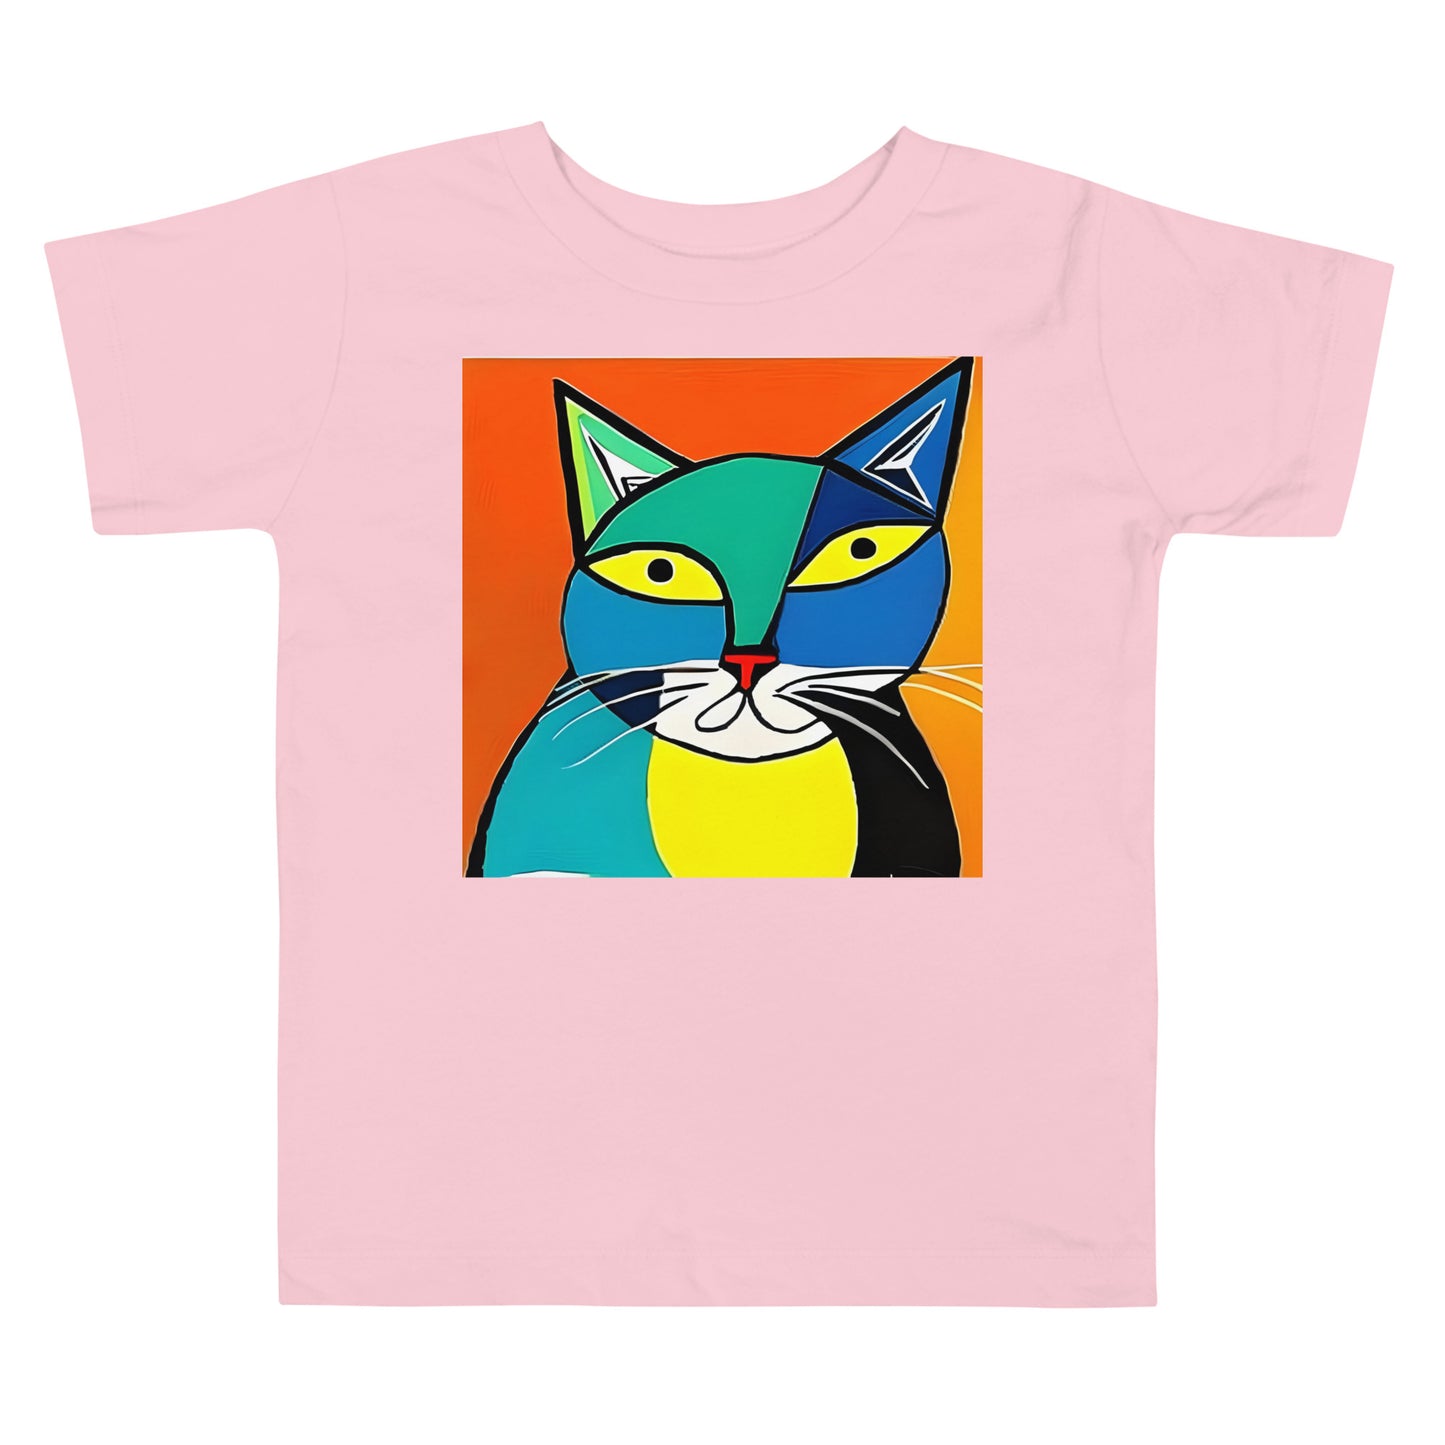 Purrfect Toddler's T-Shirt - 001